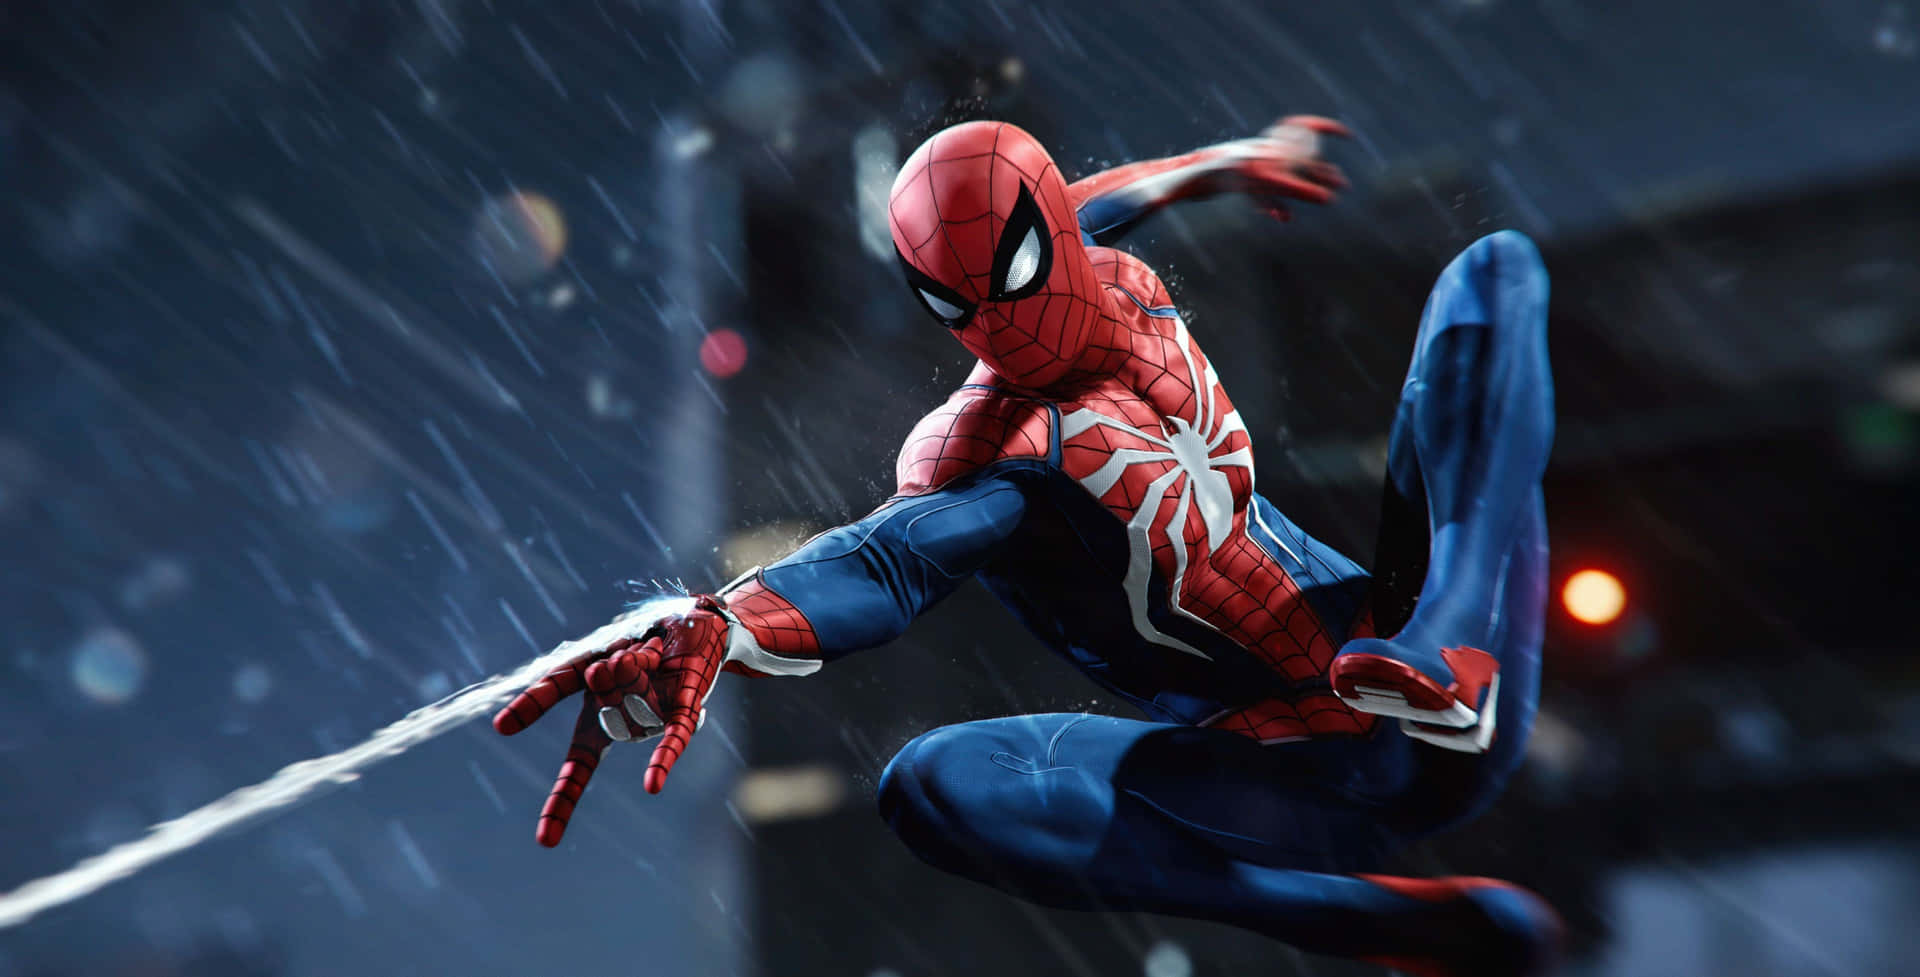 Action Marvel Spider-man Background